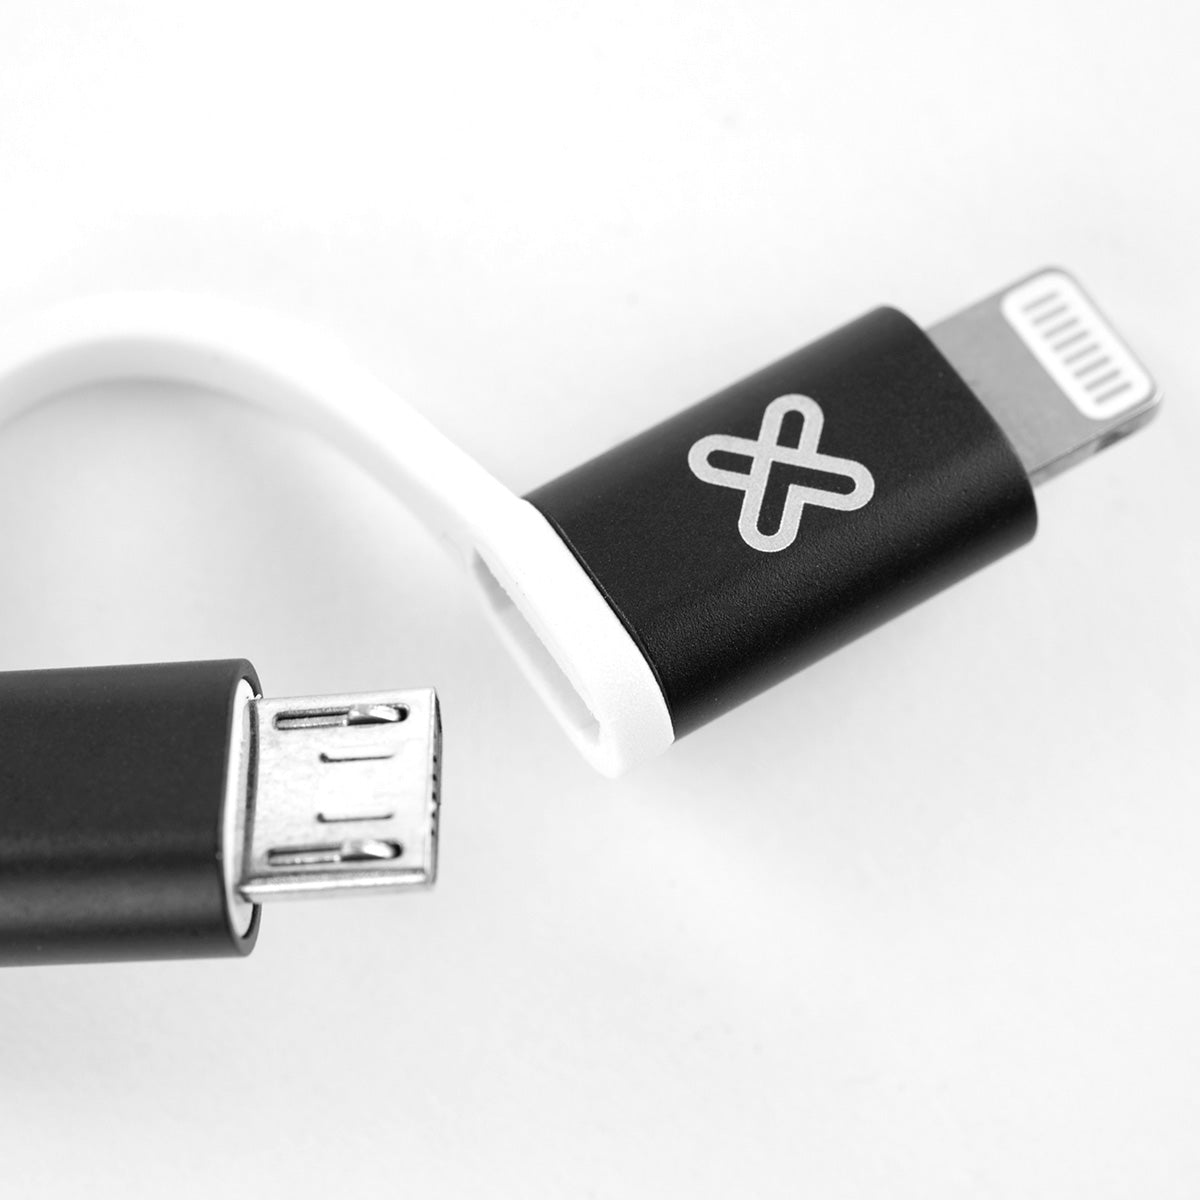 Cable KlipX 2 en 1 | USB a Micro USB/Lightning modelo KAC-210BK